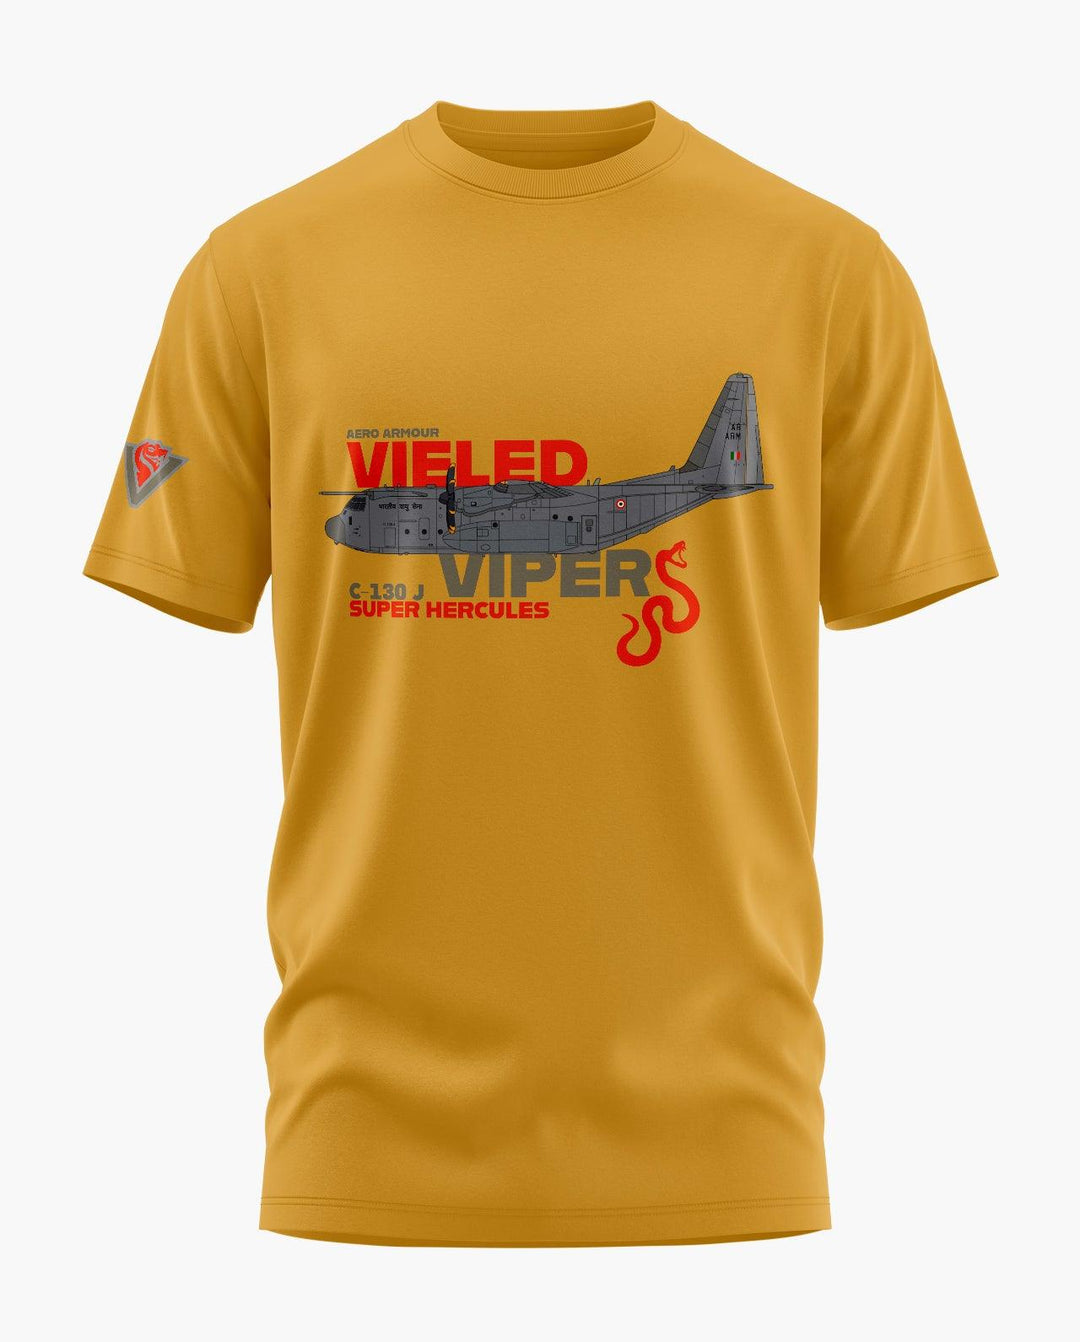 Vieled Vipers T-Shirt - Aero Armour